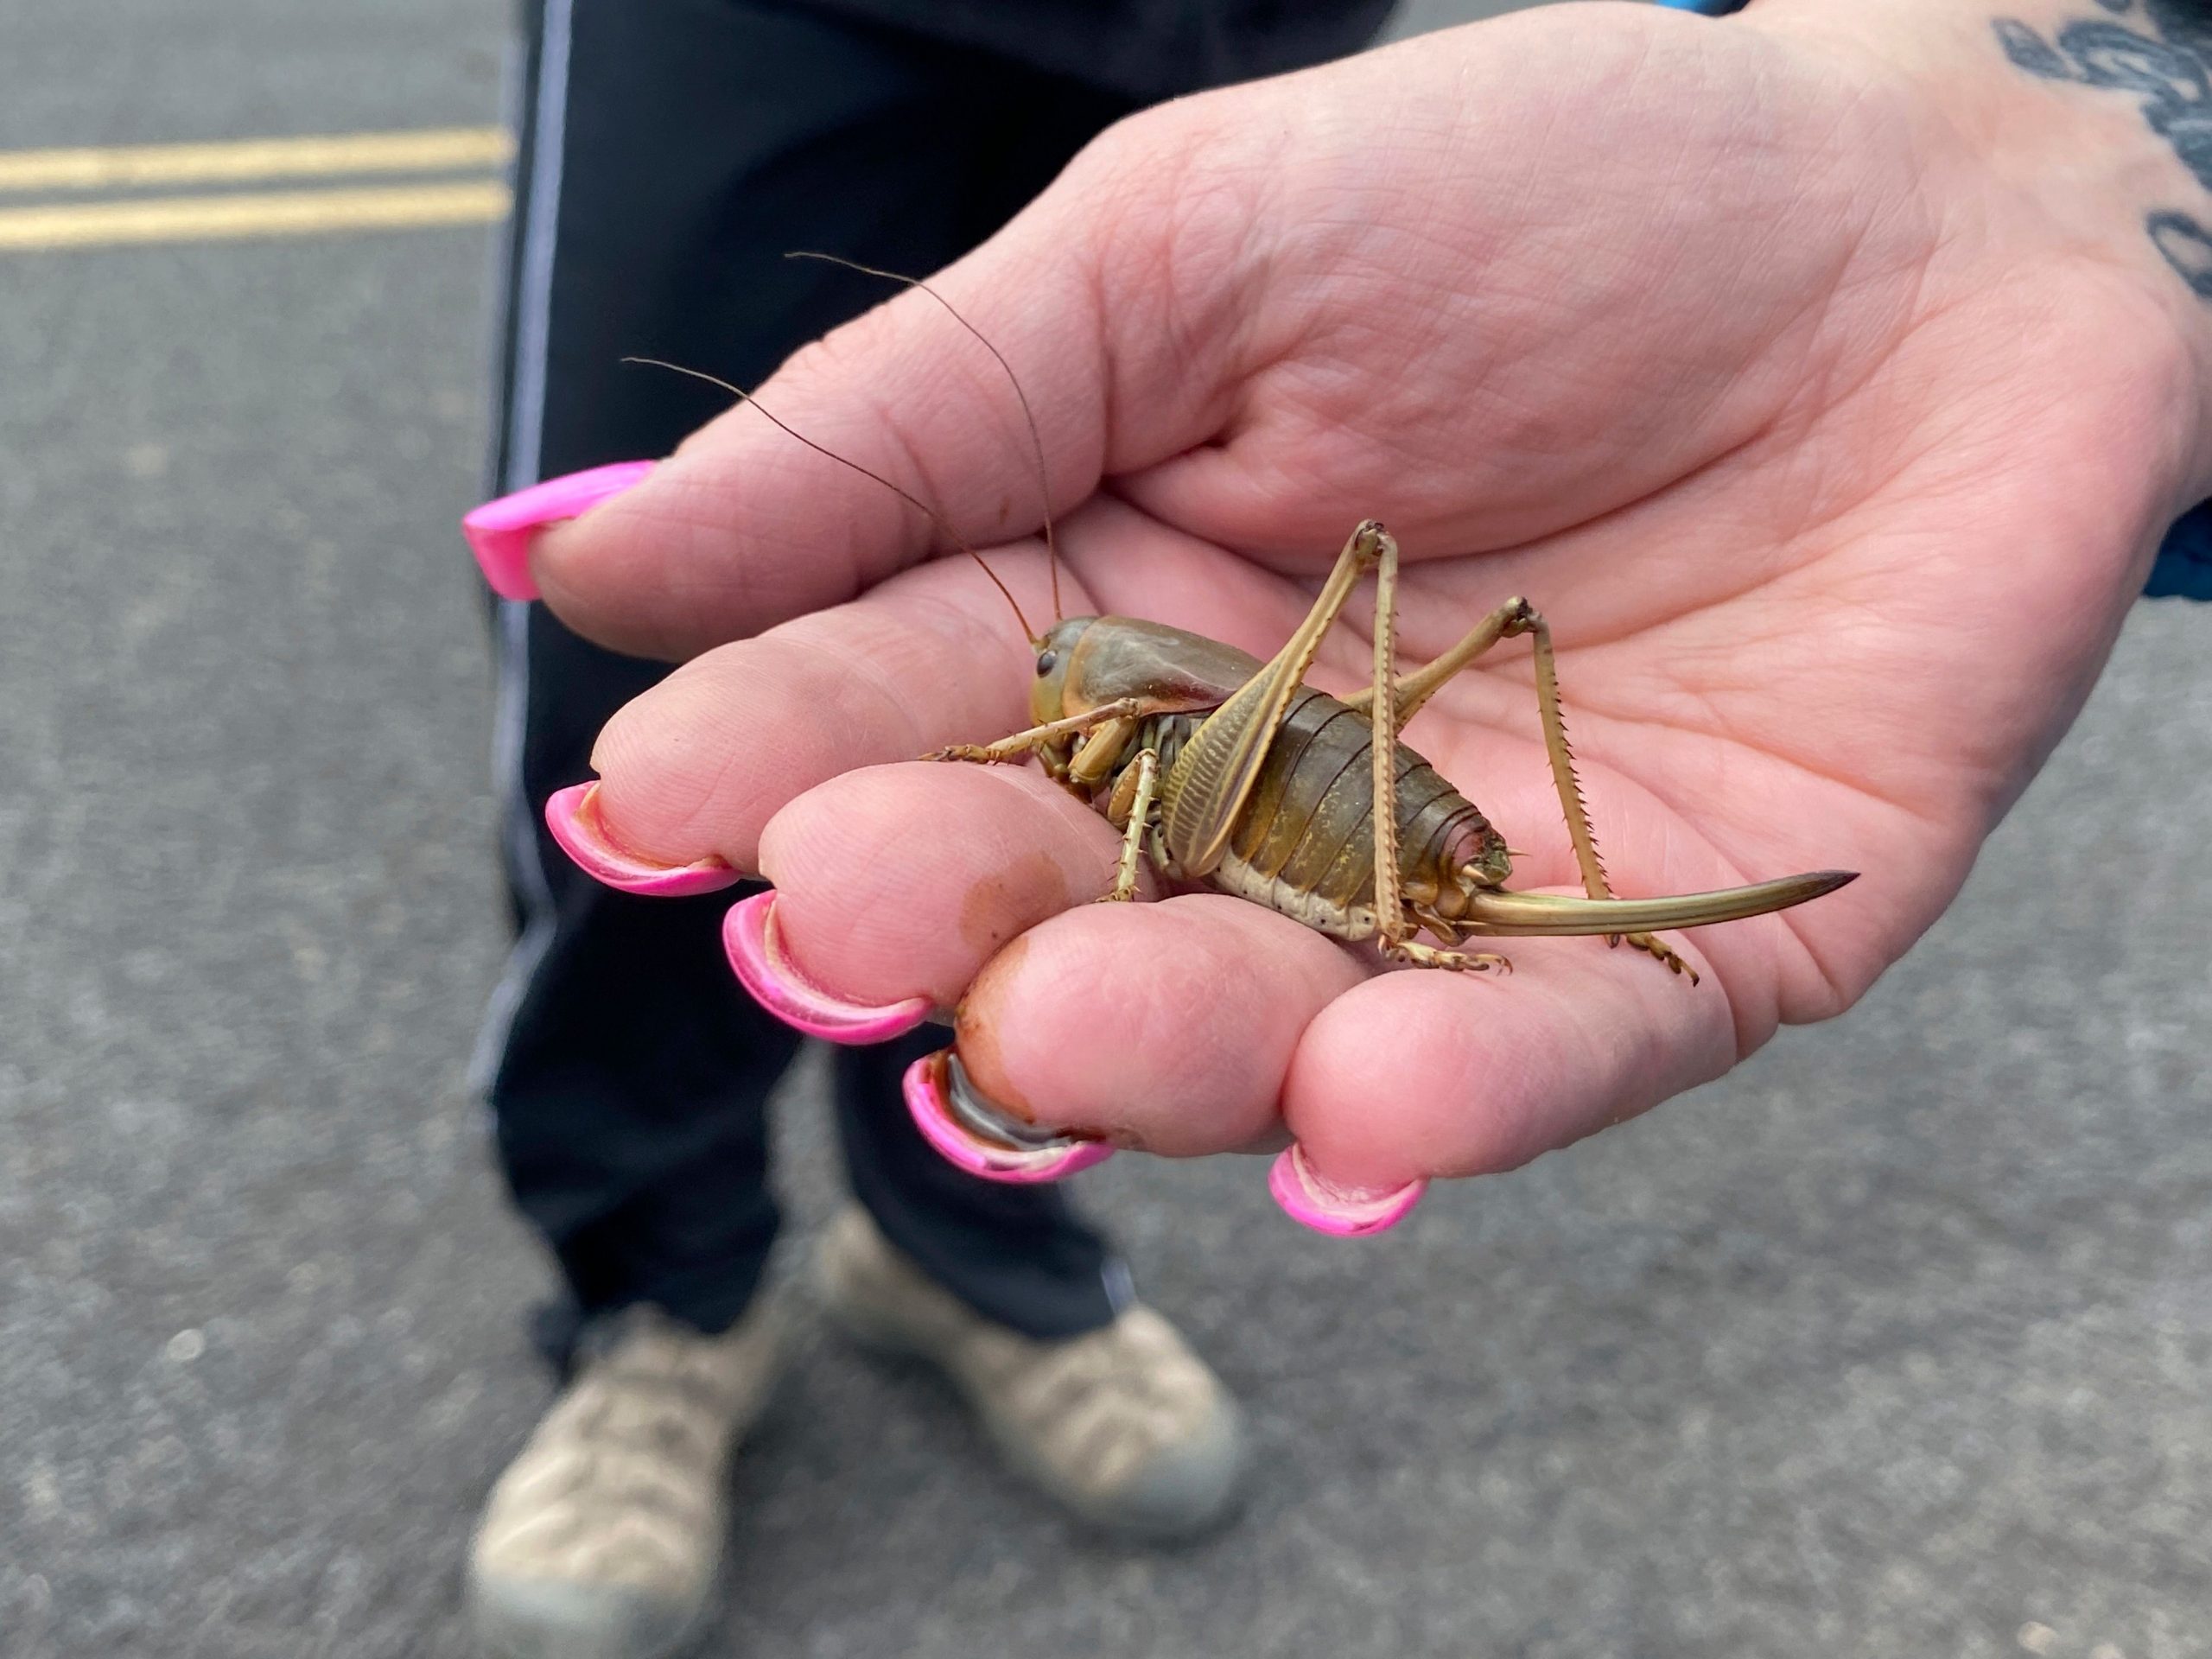 What are Mormon crickets?